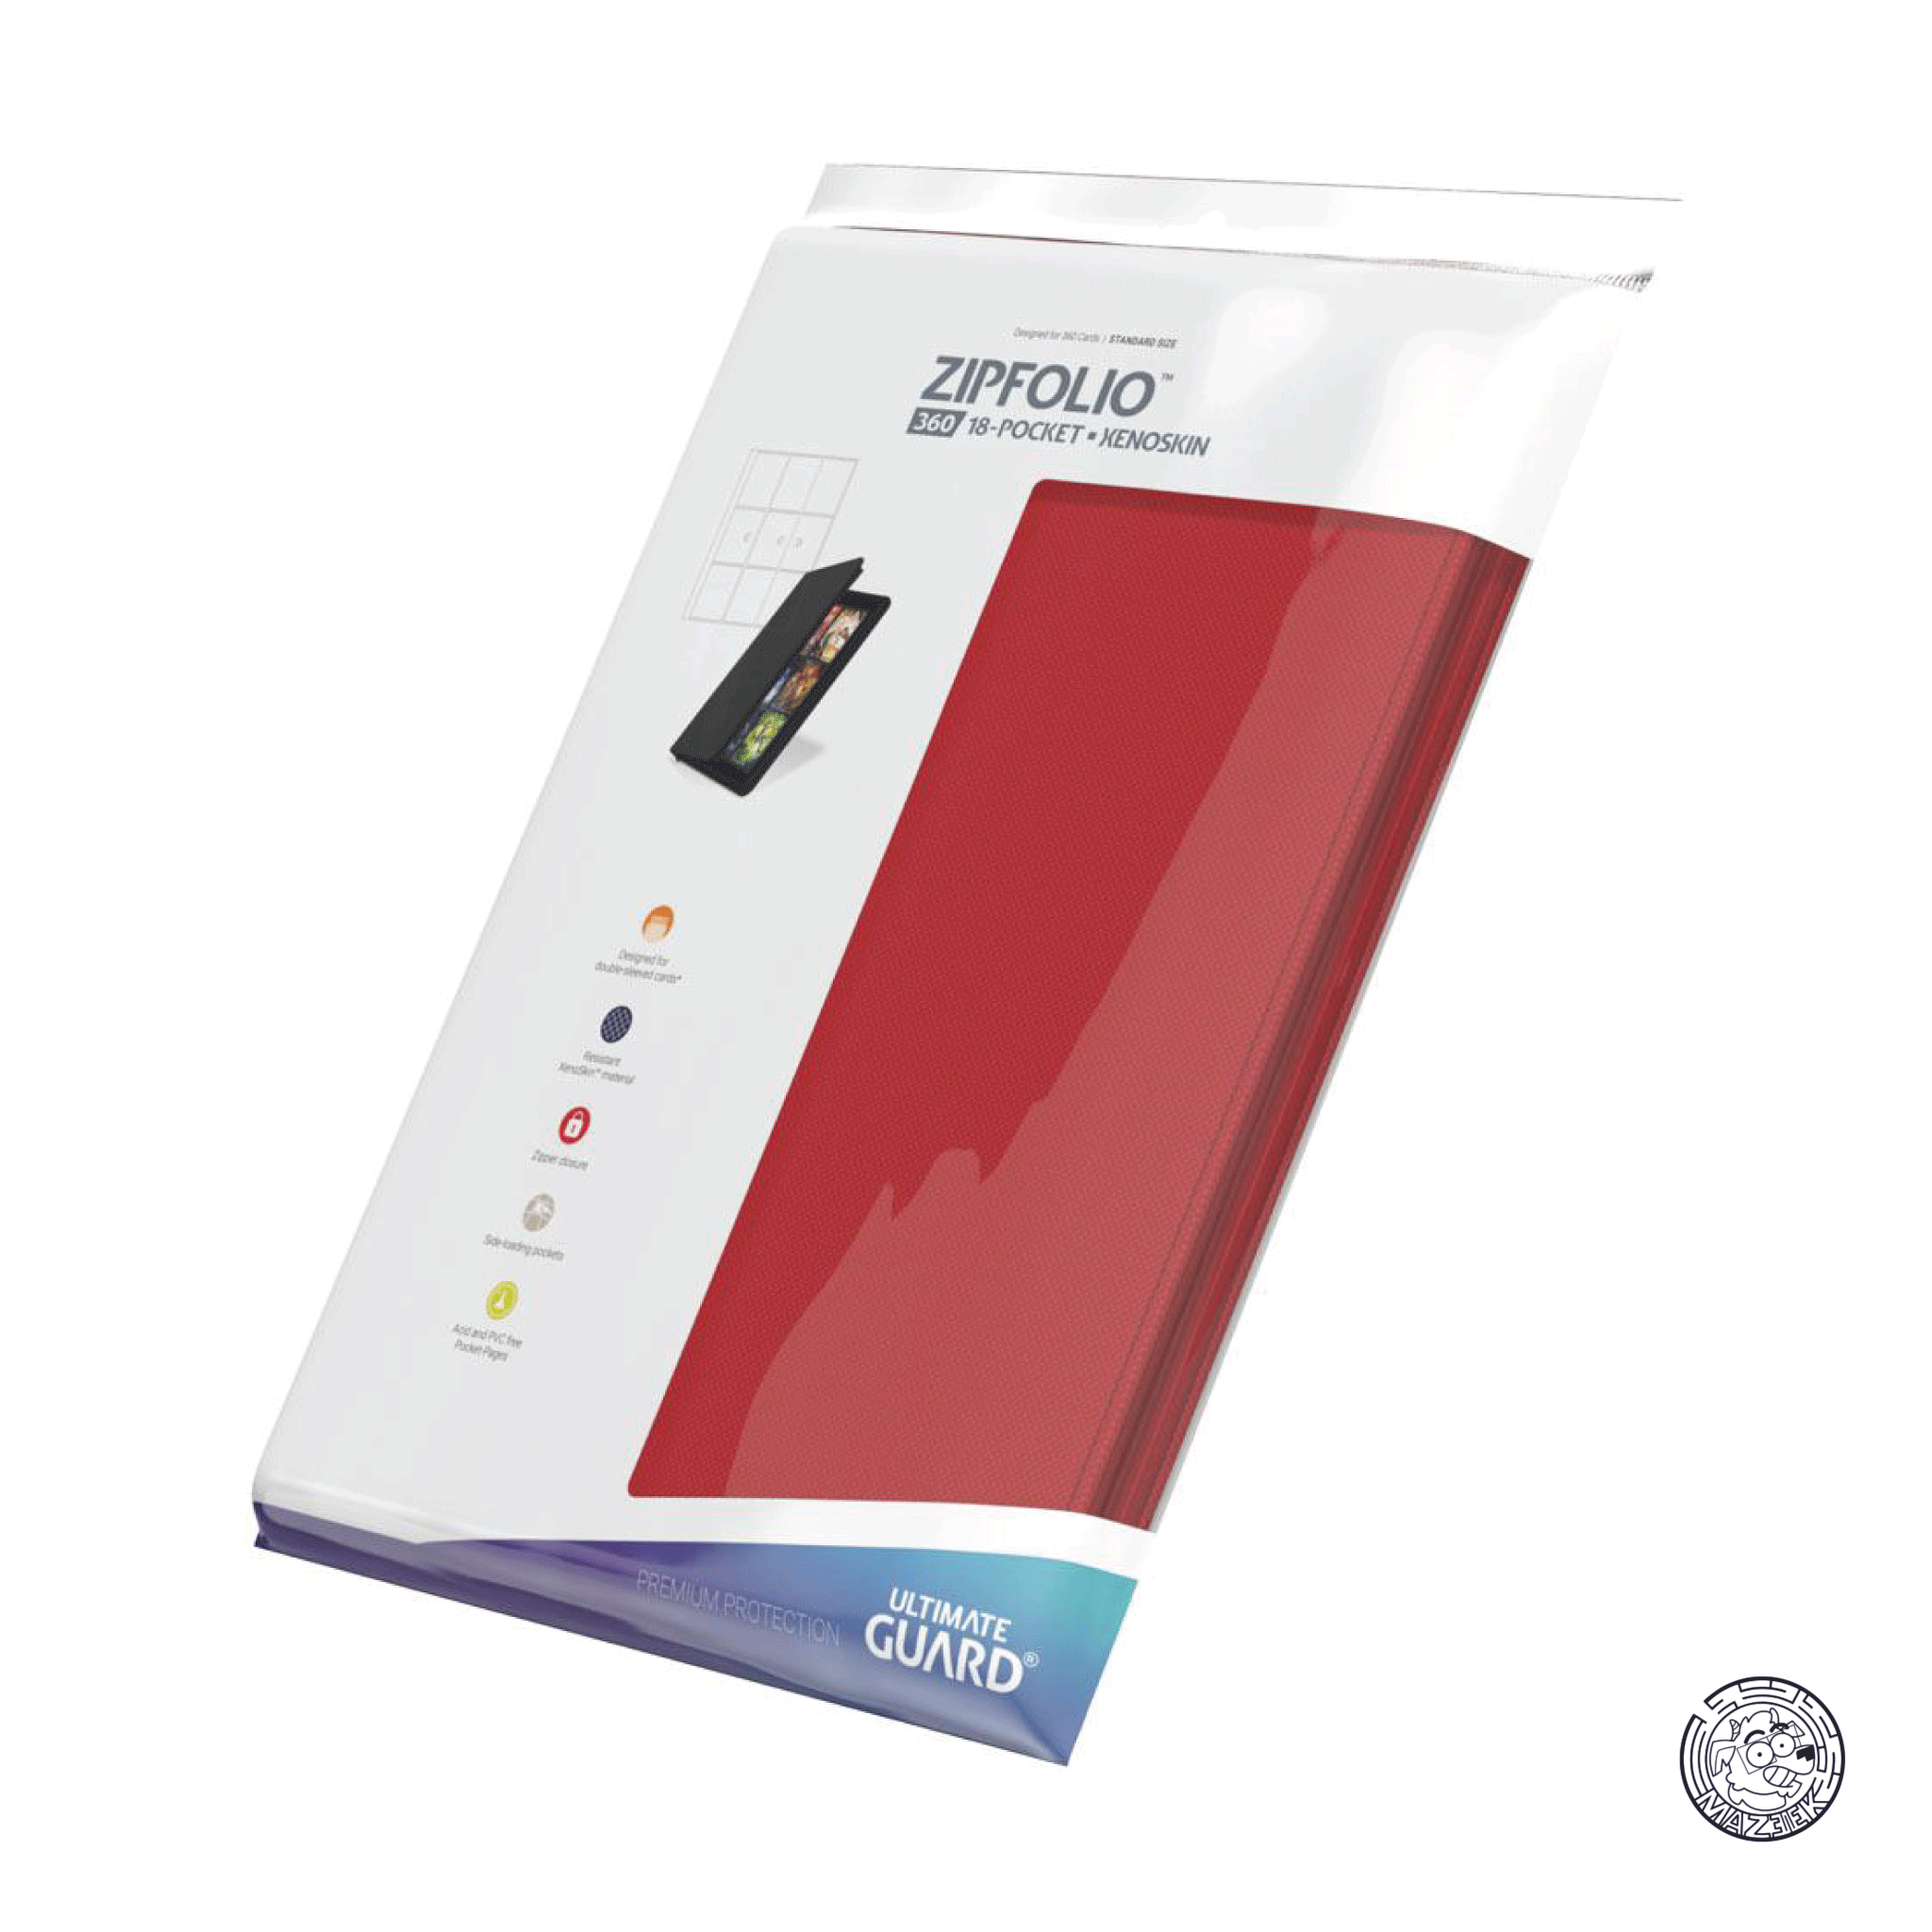 Ultimate Guard - Zipfolio 360 - 18-Pocket XenoSkin (Red)